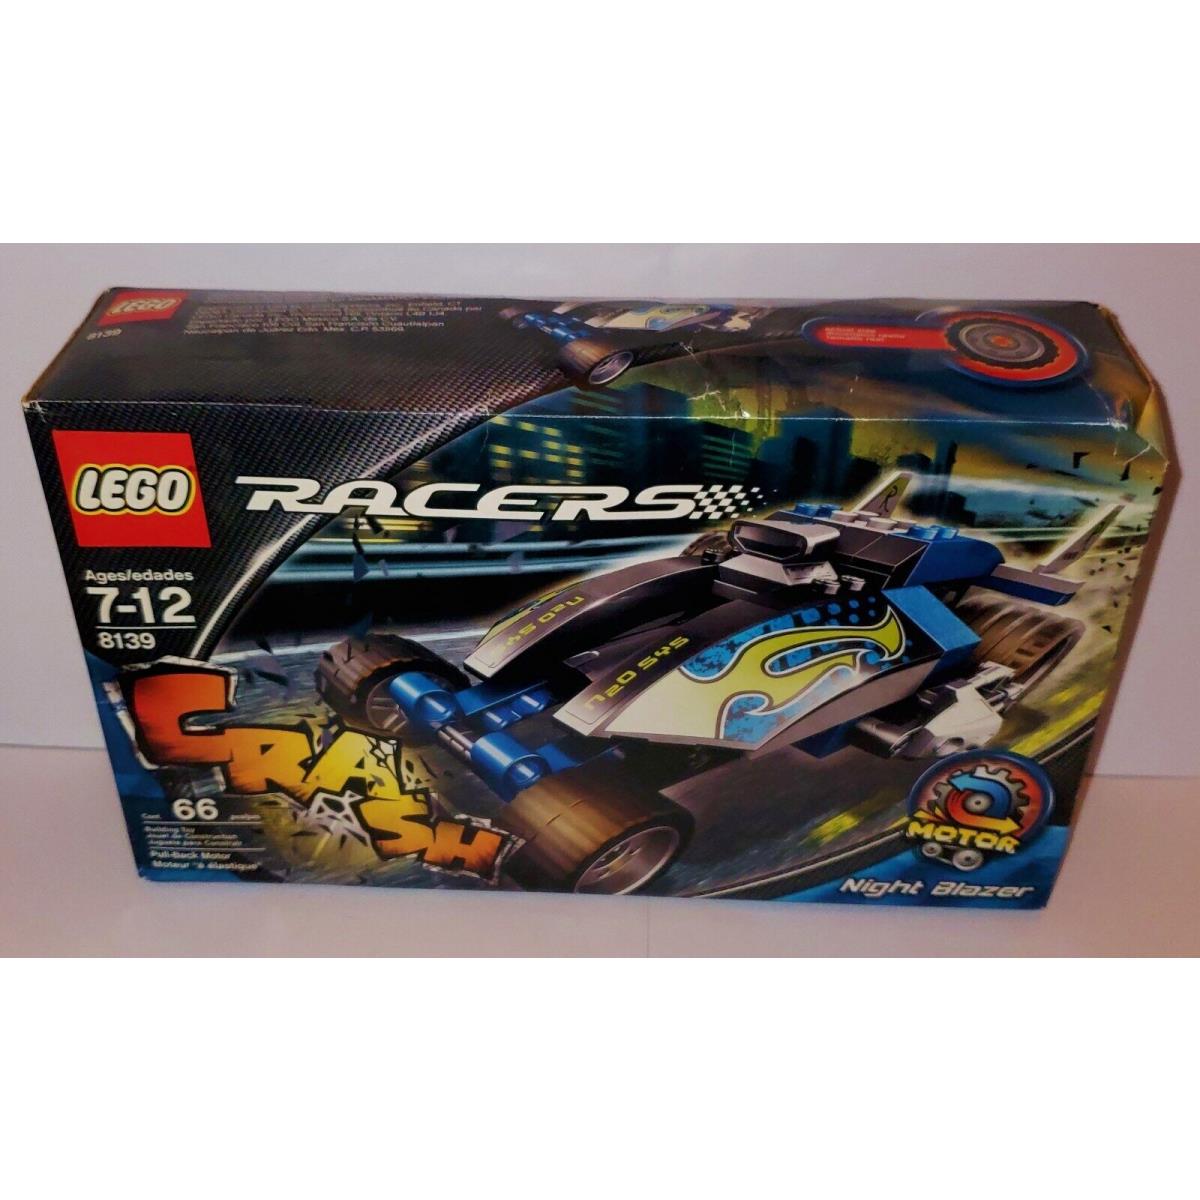 Lego World Racers Racing Set 8139 Blue Flame Power Night Blazer w/ Motor